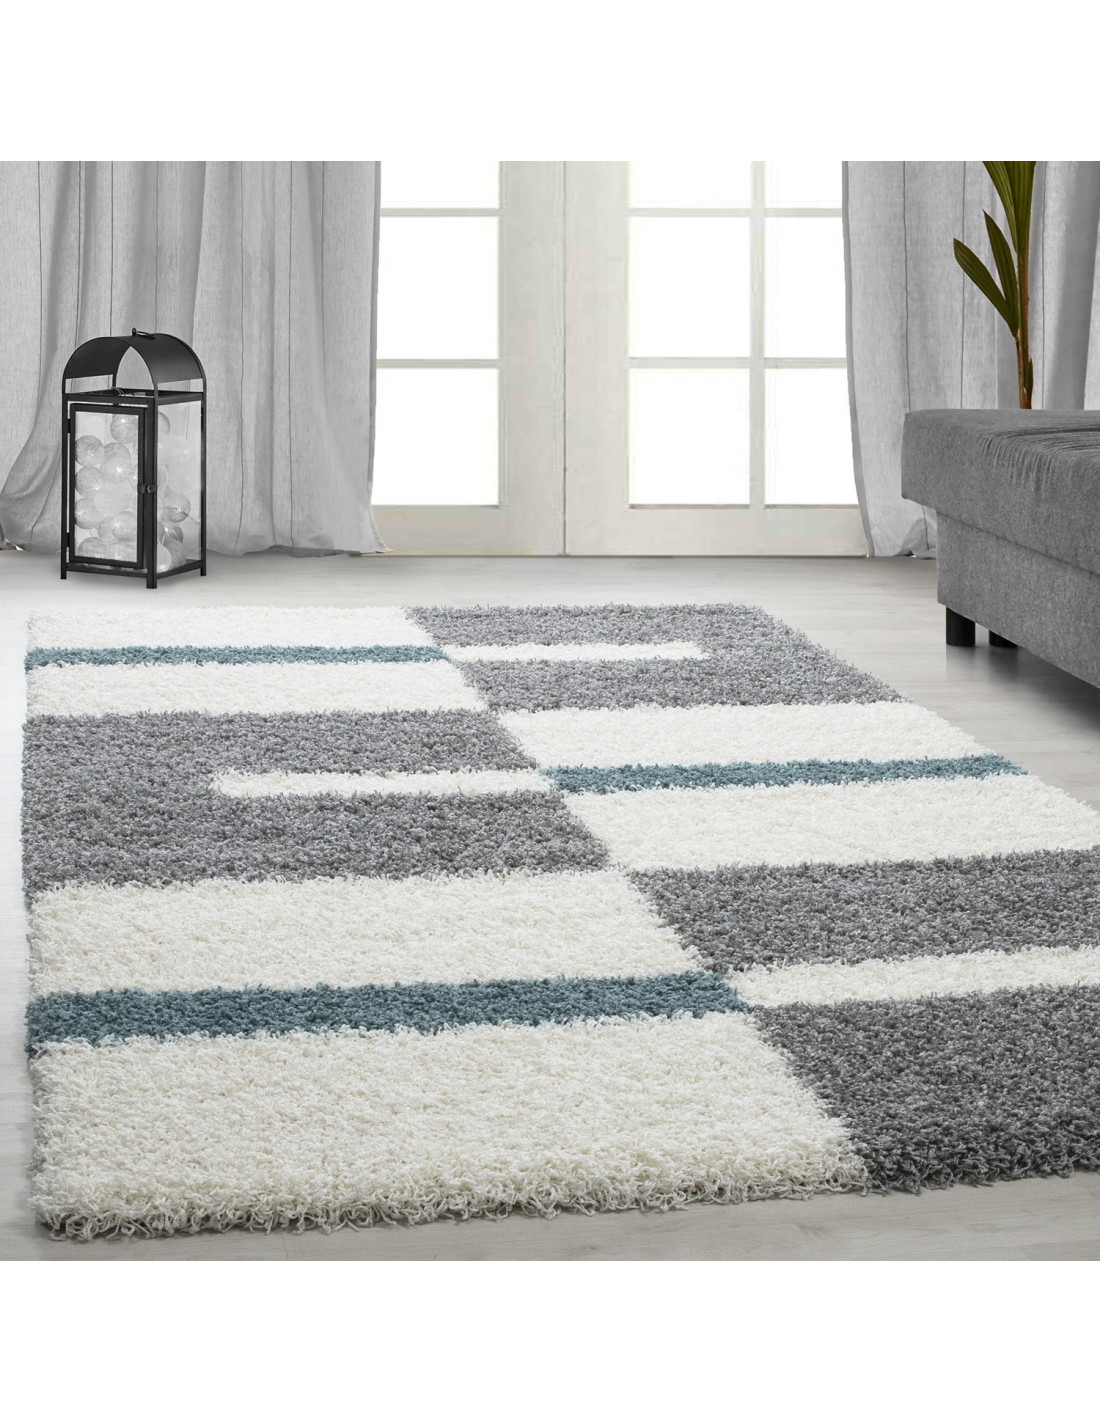 Hoogpolig tapijt, poolhoogte 3 cm, grijs-wit-turkoois